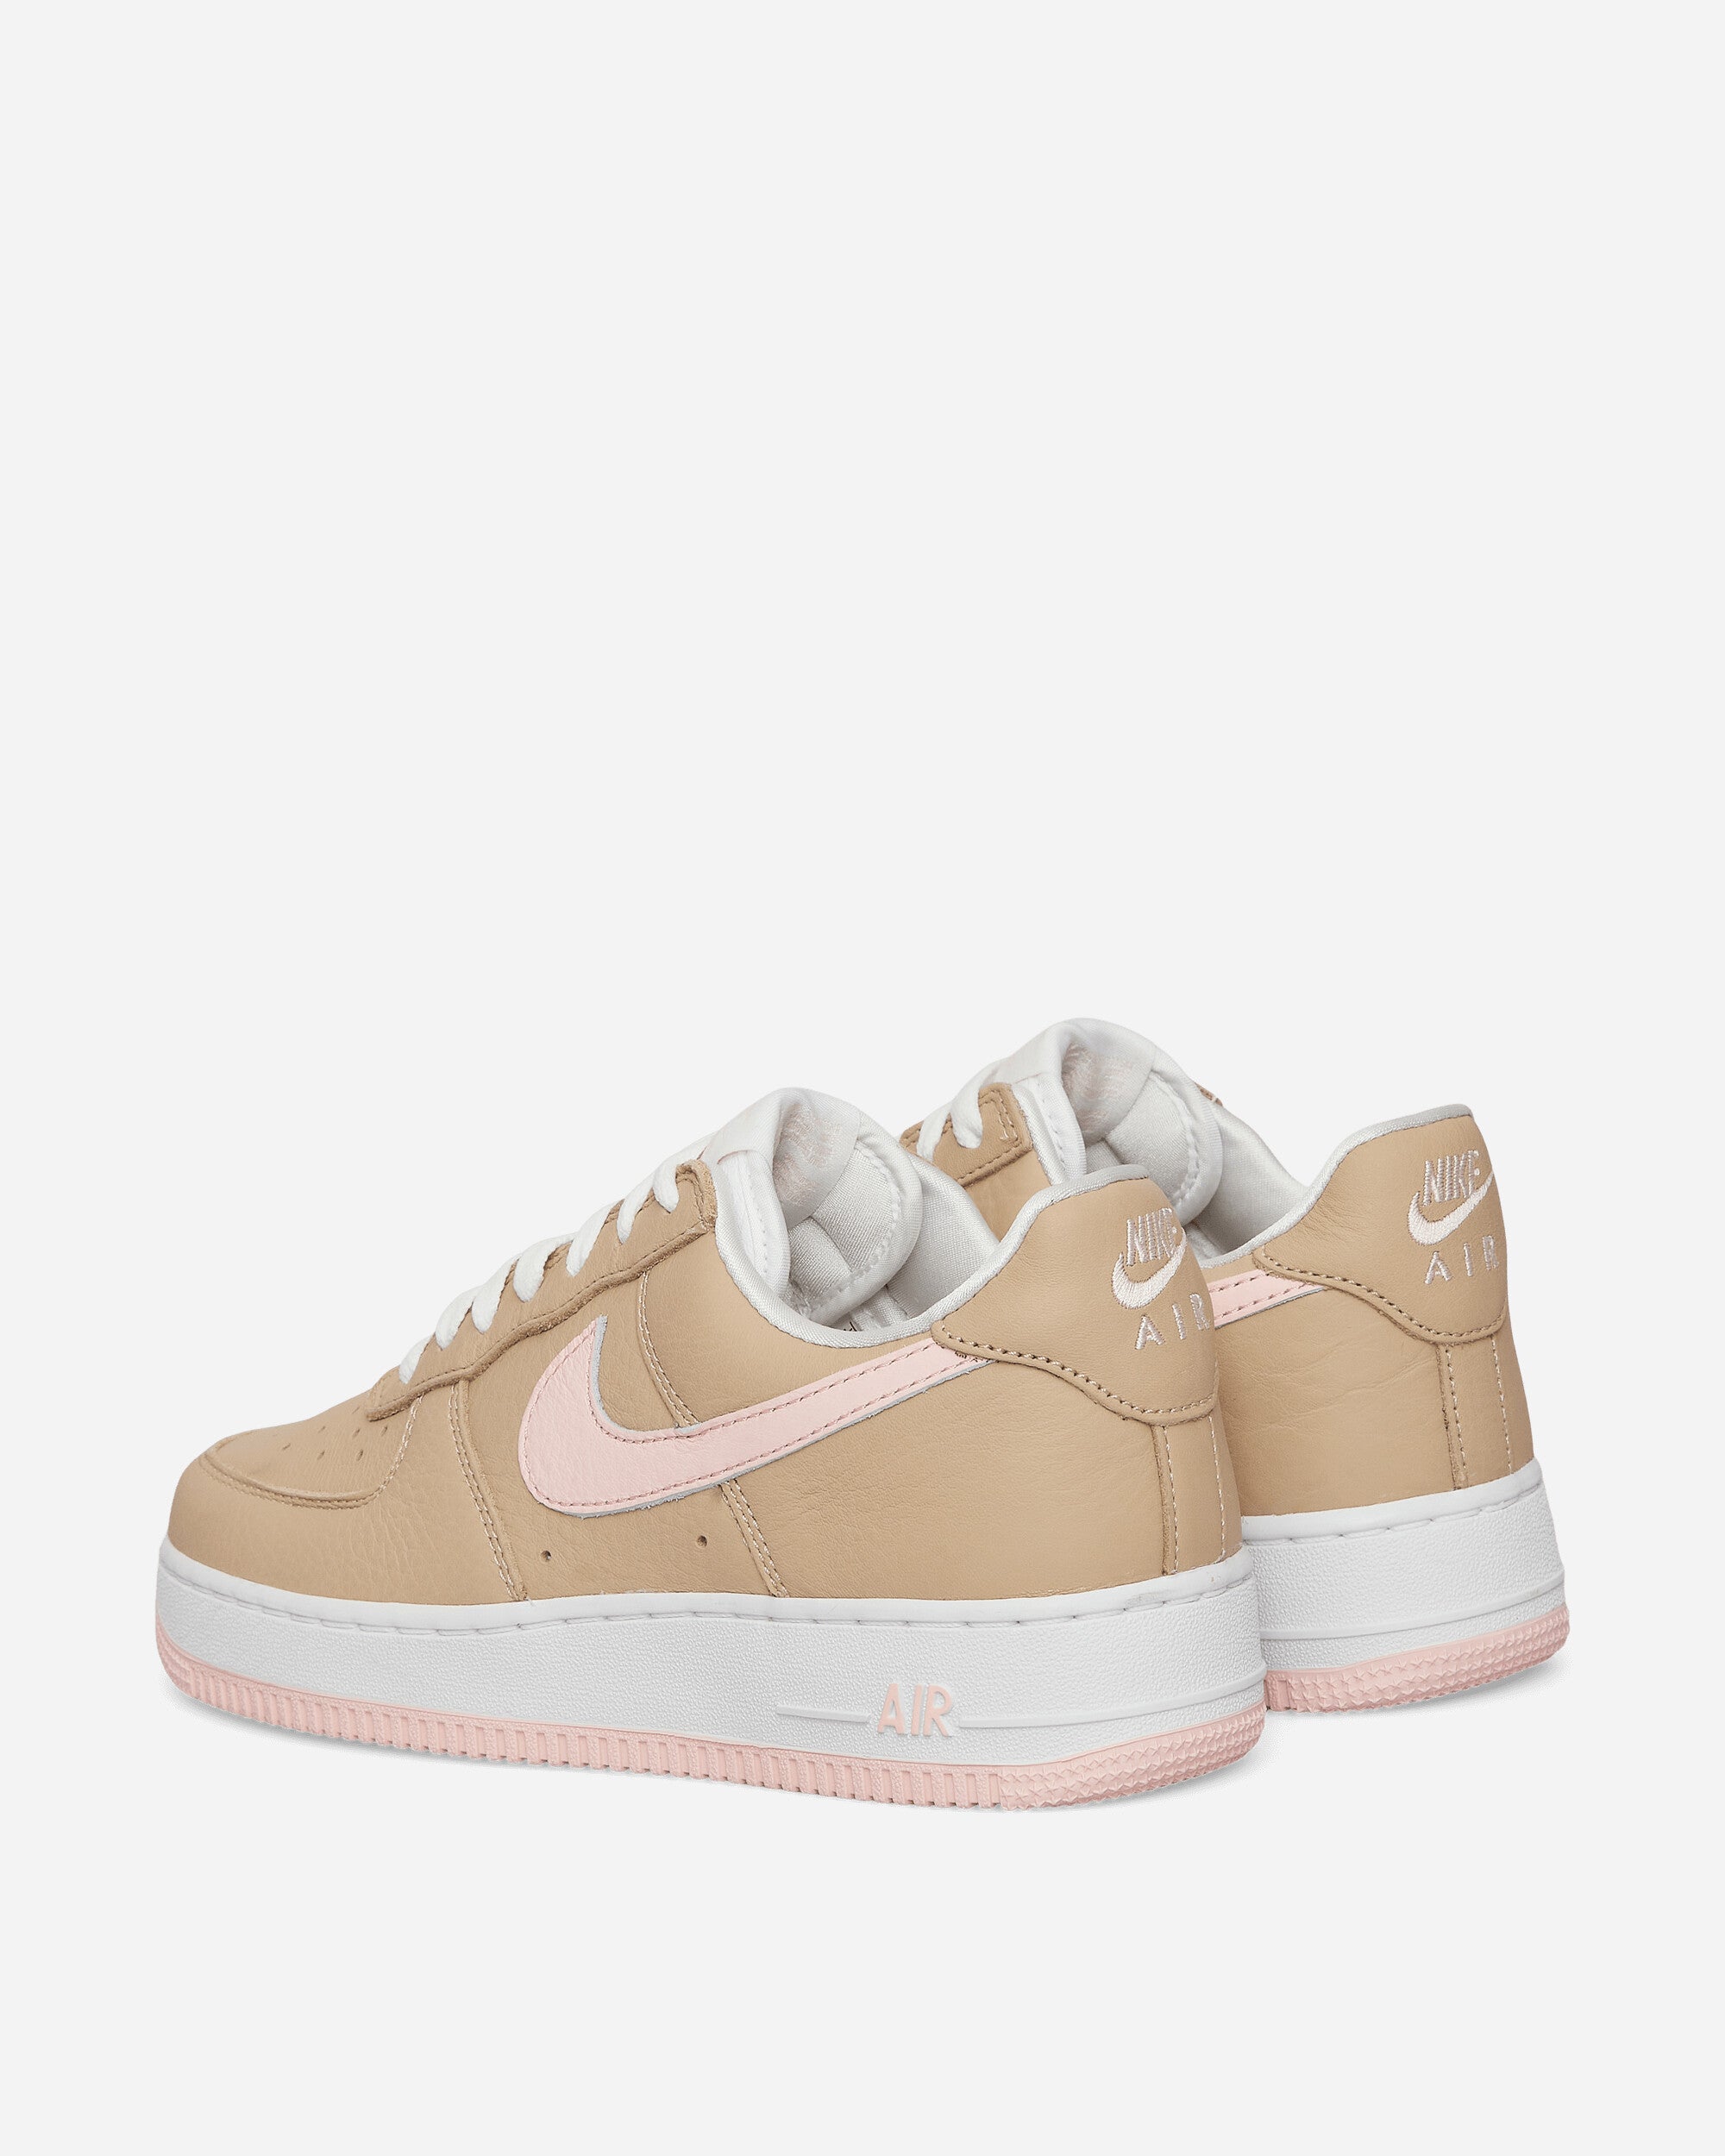 Nike Air Force 1 Low Retro Linen/Atmosphere Sneakers Low 845053-201